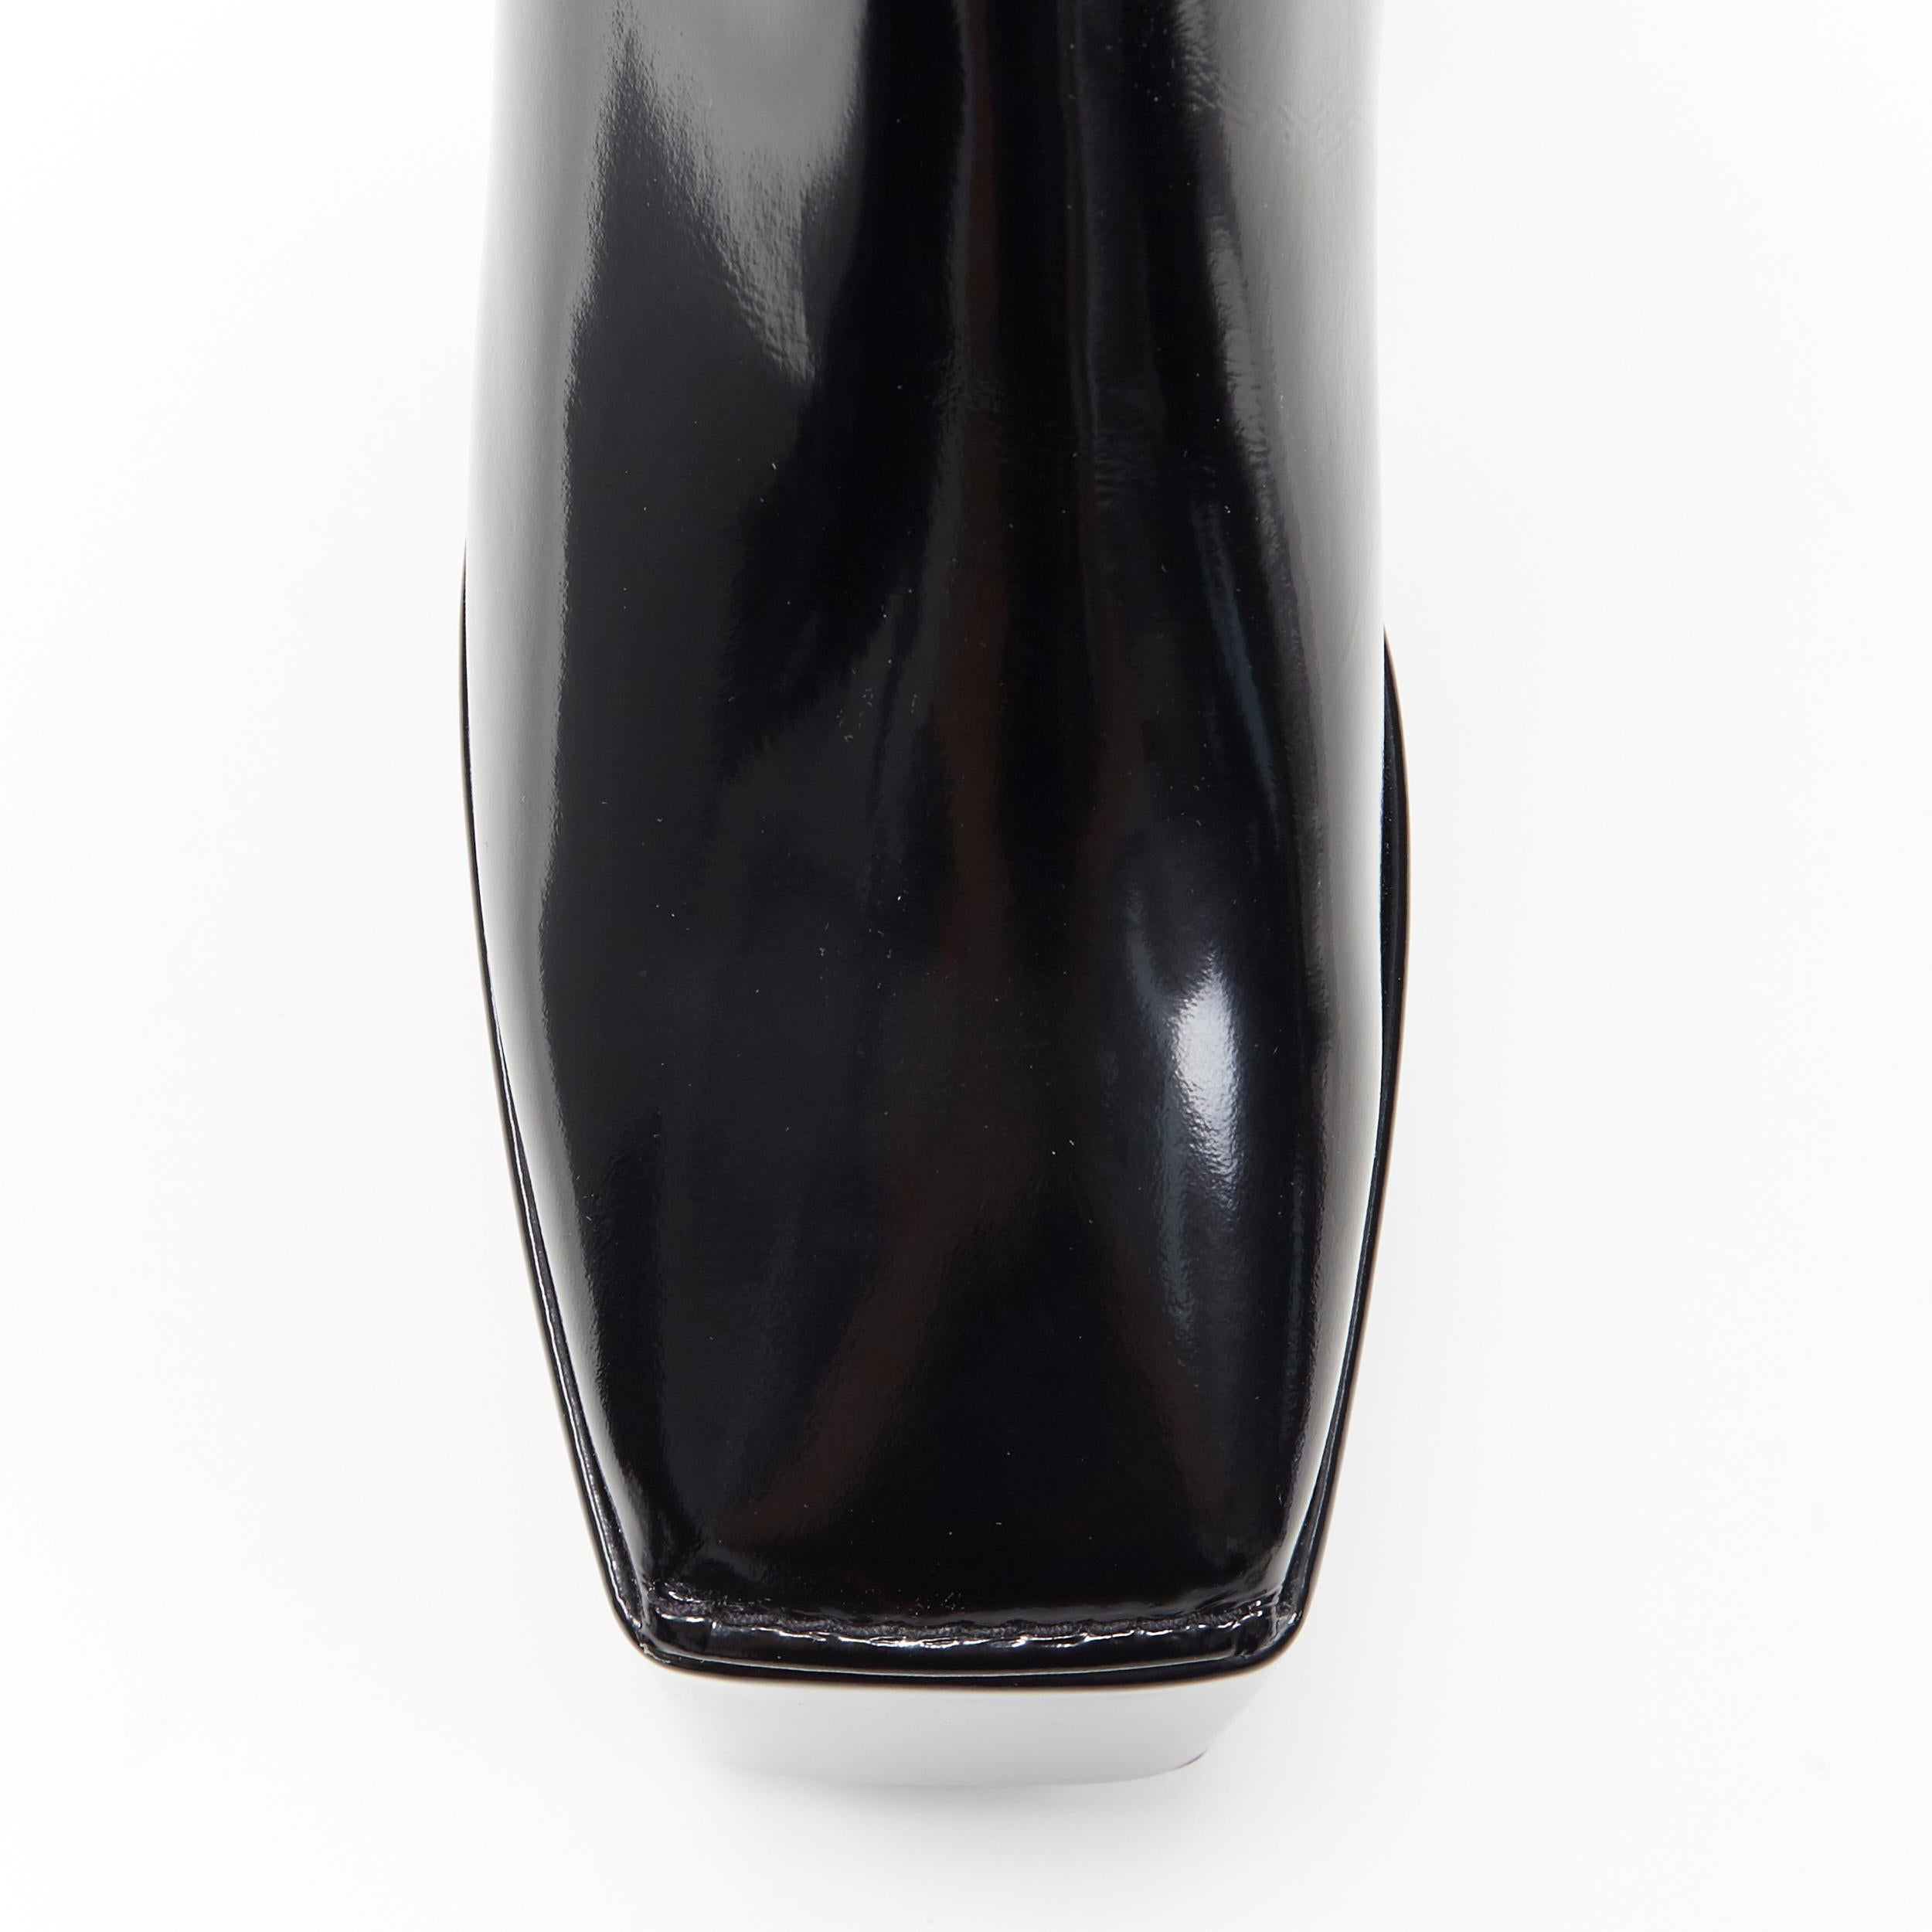 new BALENCIAGA DEMNA iconic Wayio black polished leather platform boots EU39
Brand: Balenciaga
Designer: Demna Gvasalia
Model Name / Style: Wayio
Material: Leather
Color: Black
Pattern: Solid
Closure: Zip
Extra Detail: Square toe. Platform sole.